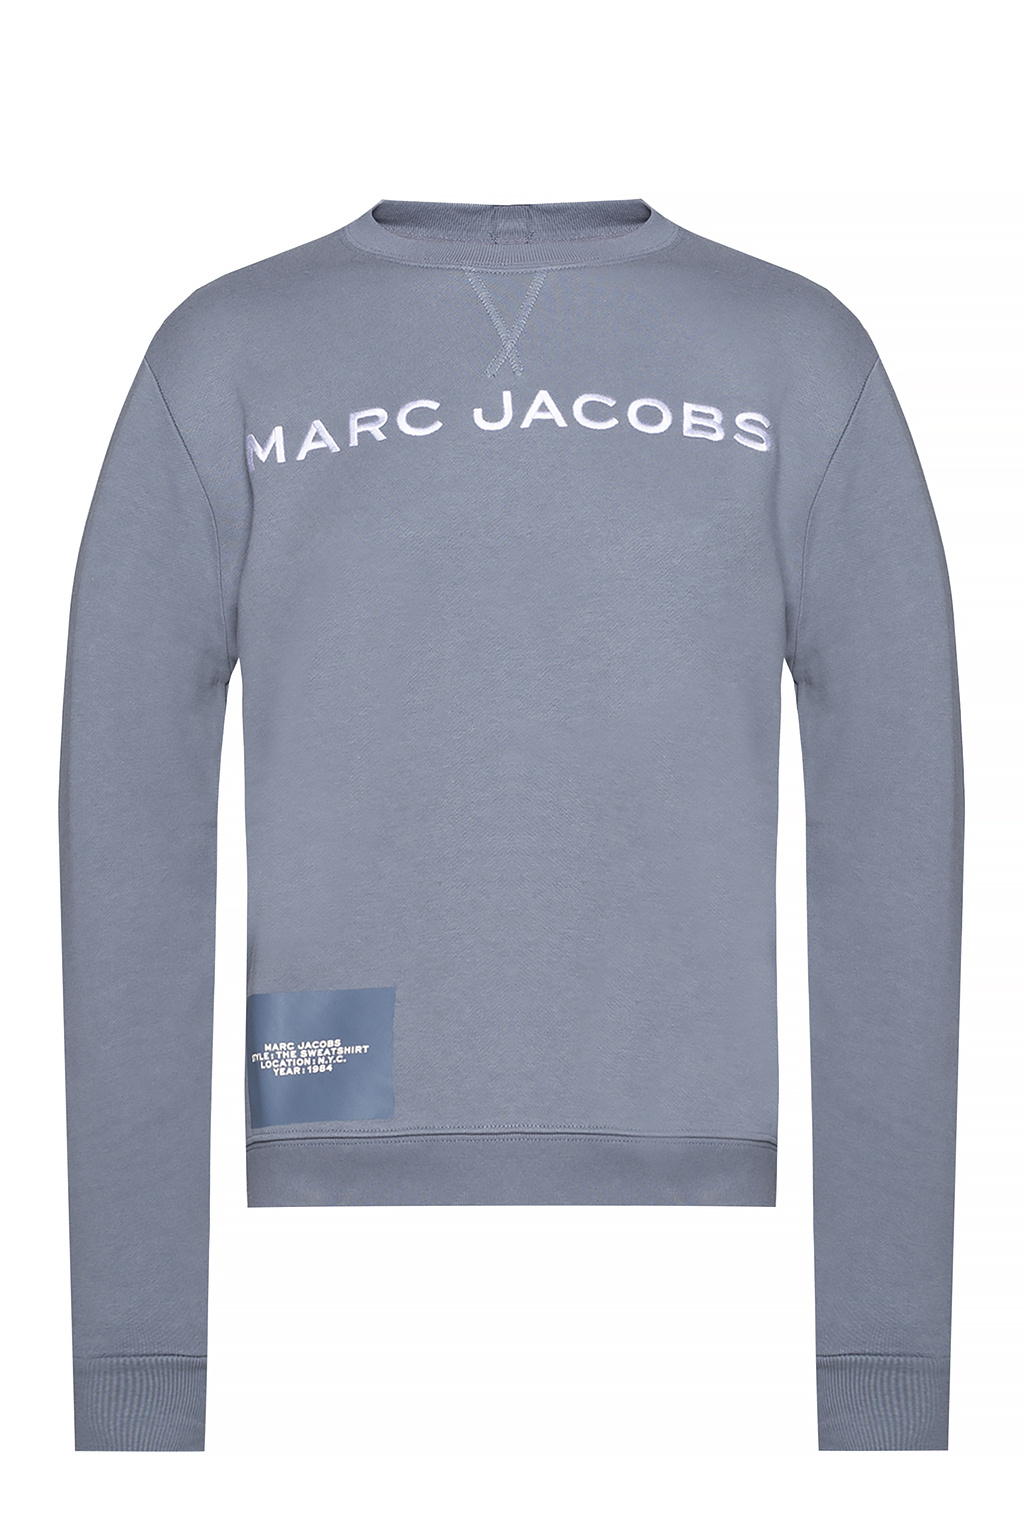 Marc Jacobs air jordan 1 mid white shadow hoodies